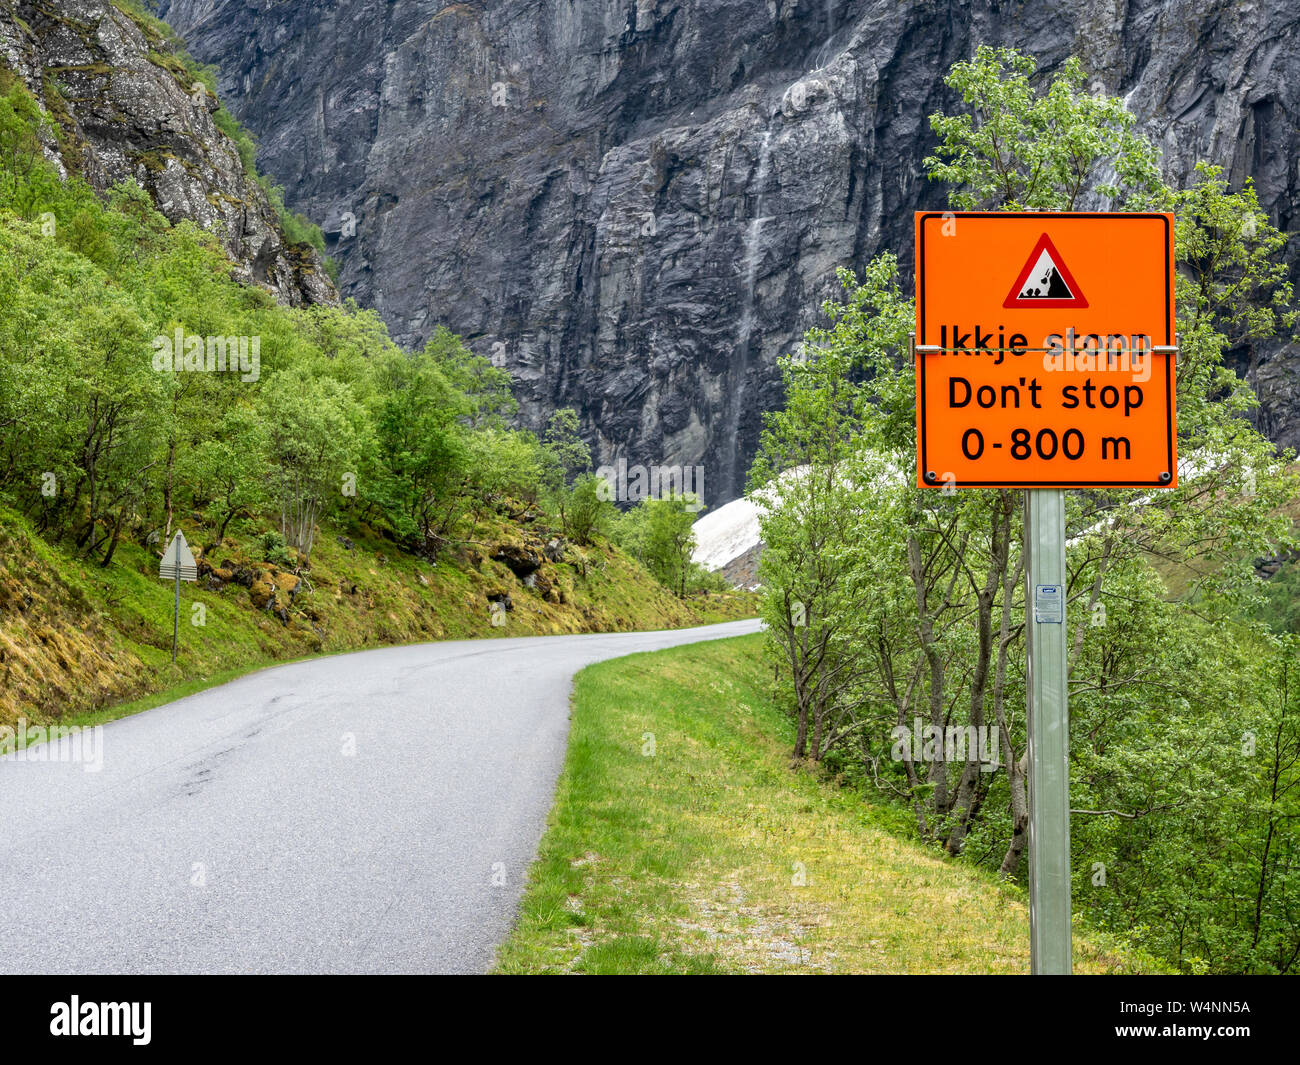 Narrow road, warning sign, landslide, dont stop, Norangsdal valley, Norway. Stock Photo